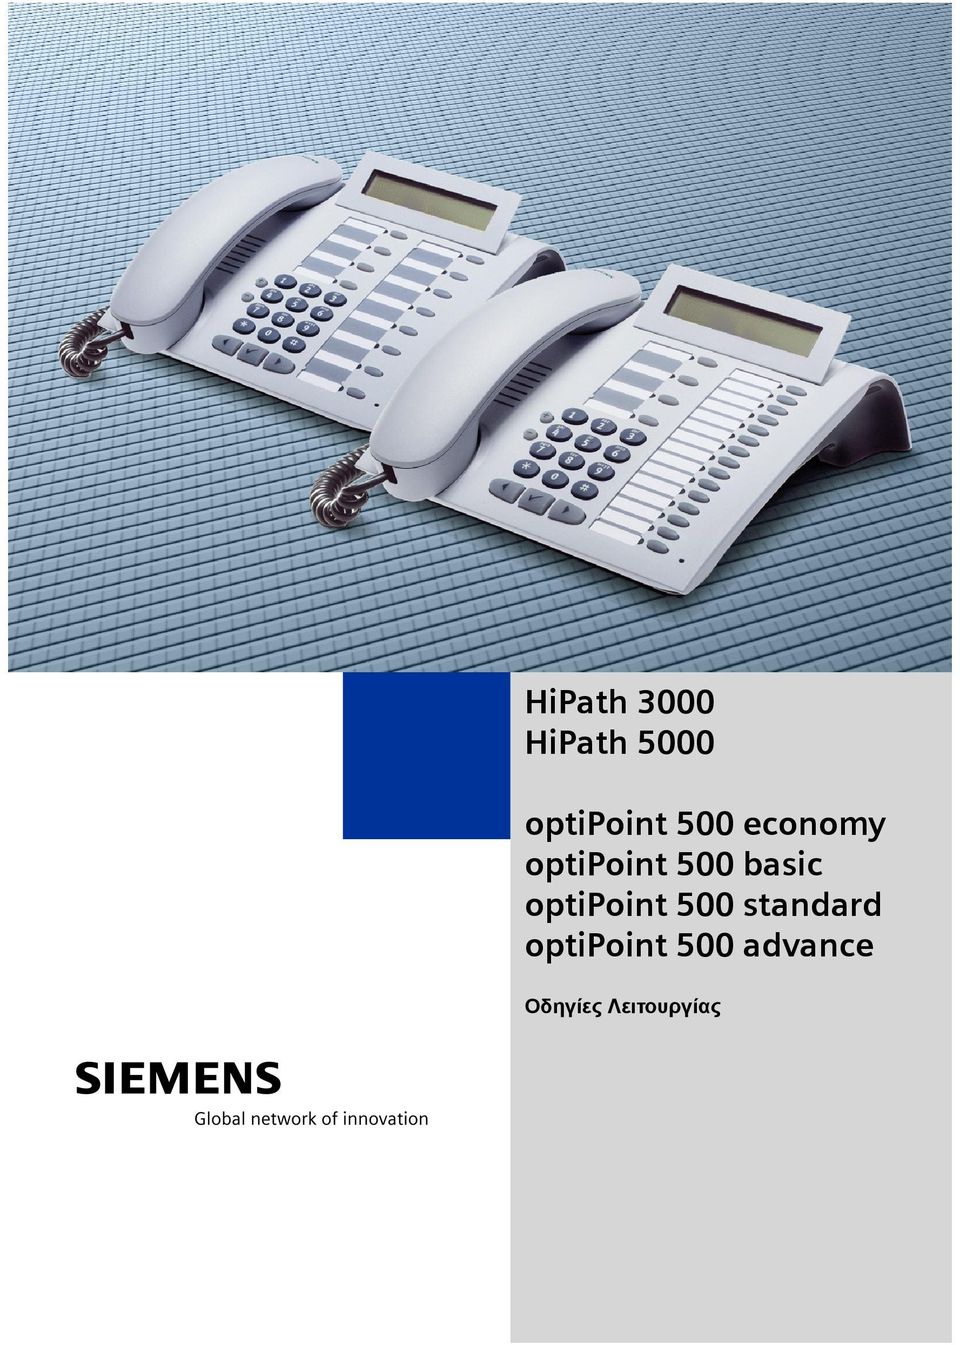 basic ptipint 500 standard